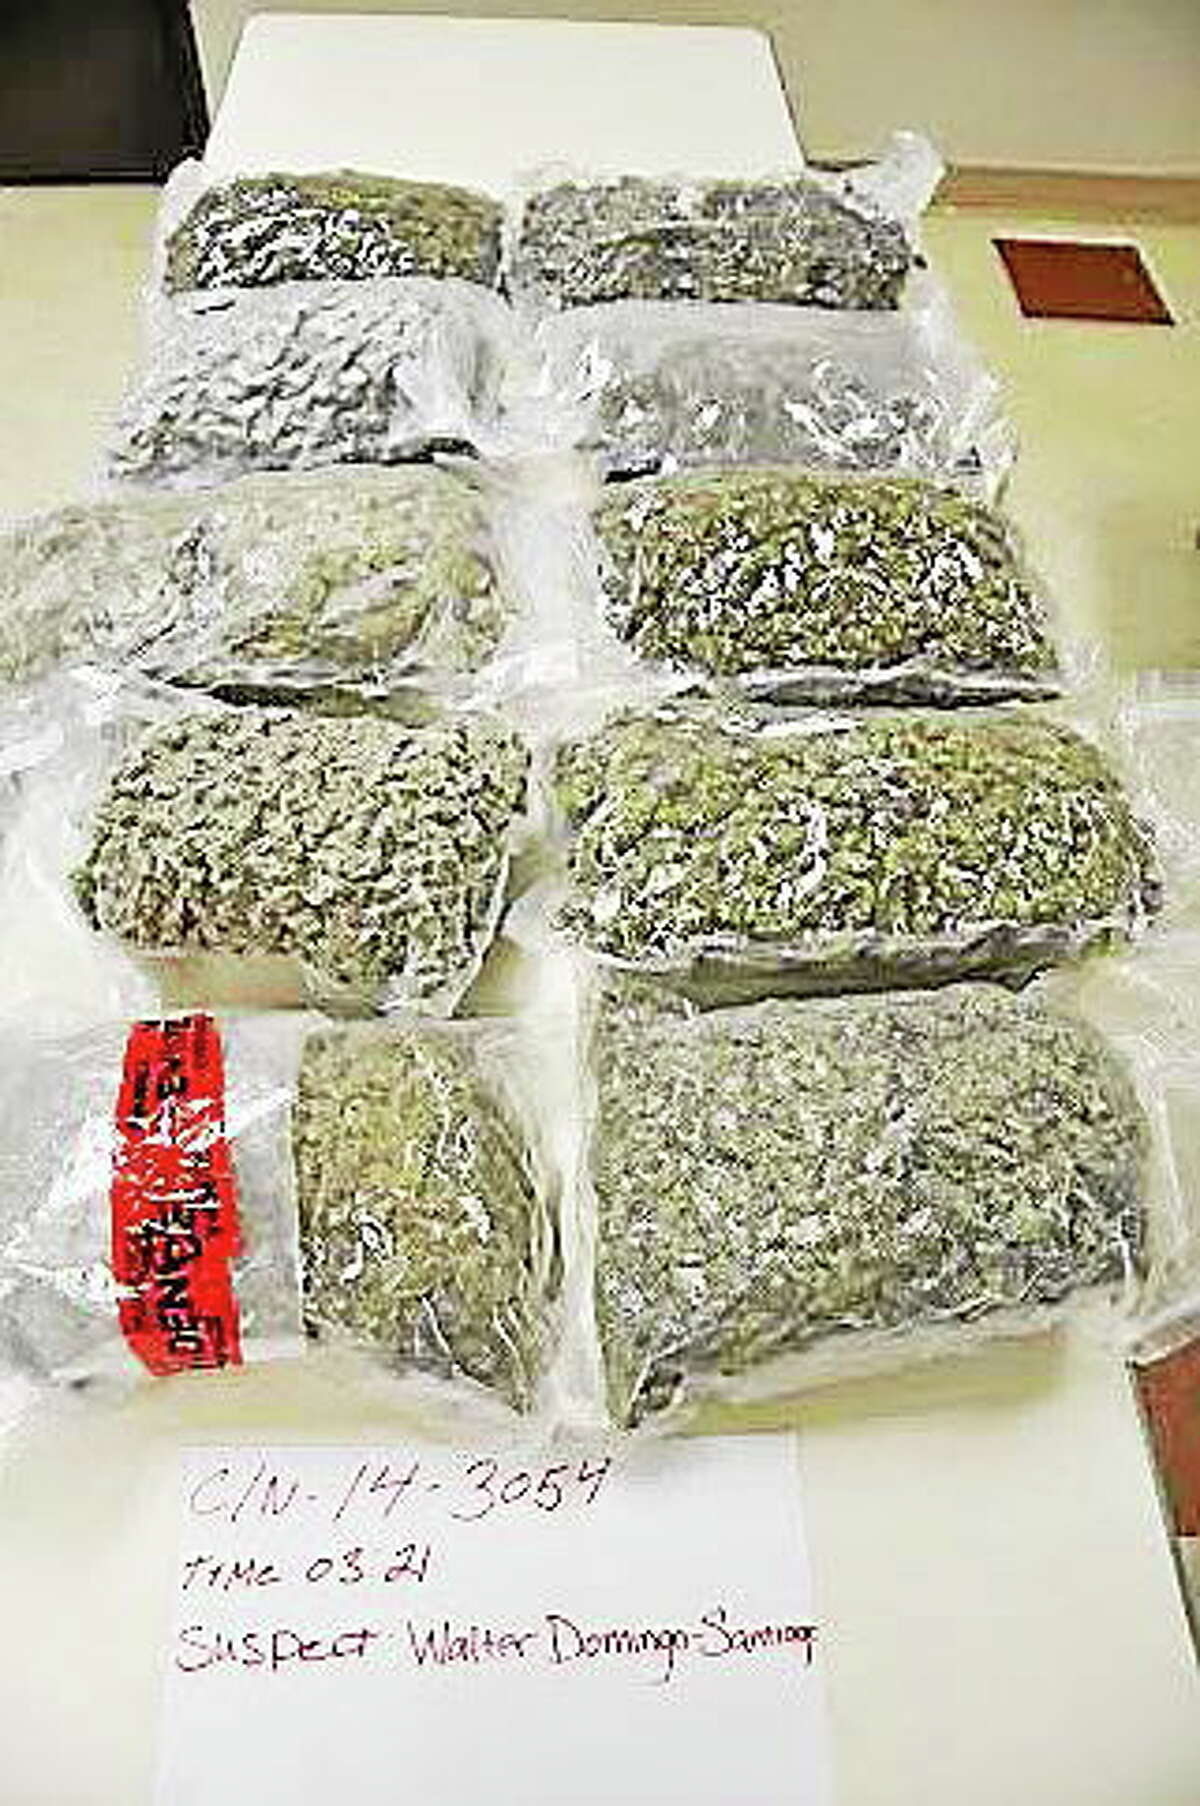 The bags of marijuana found inside Domingo-Santiago’s car.